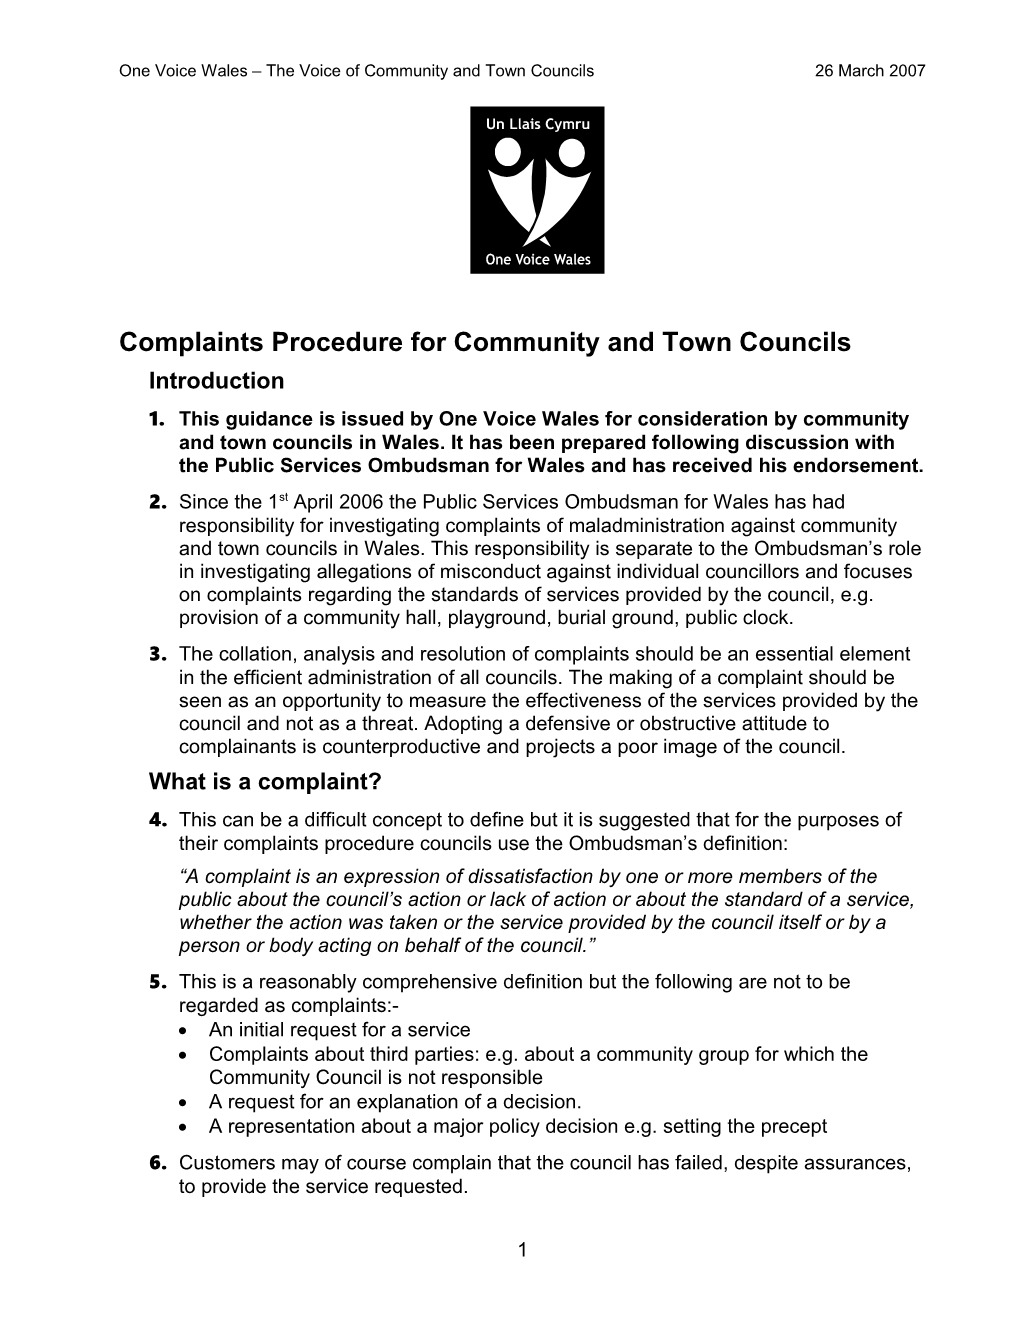 Complaints Procedure for Community and Town Councils